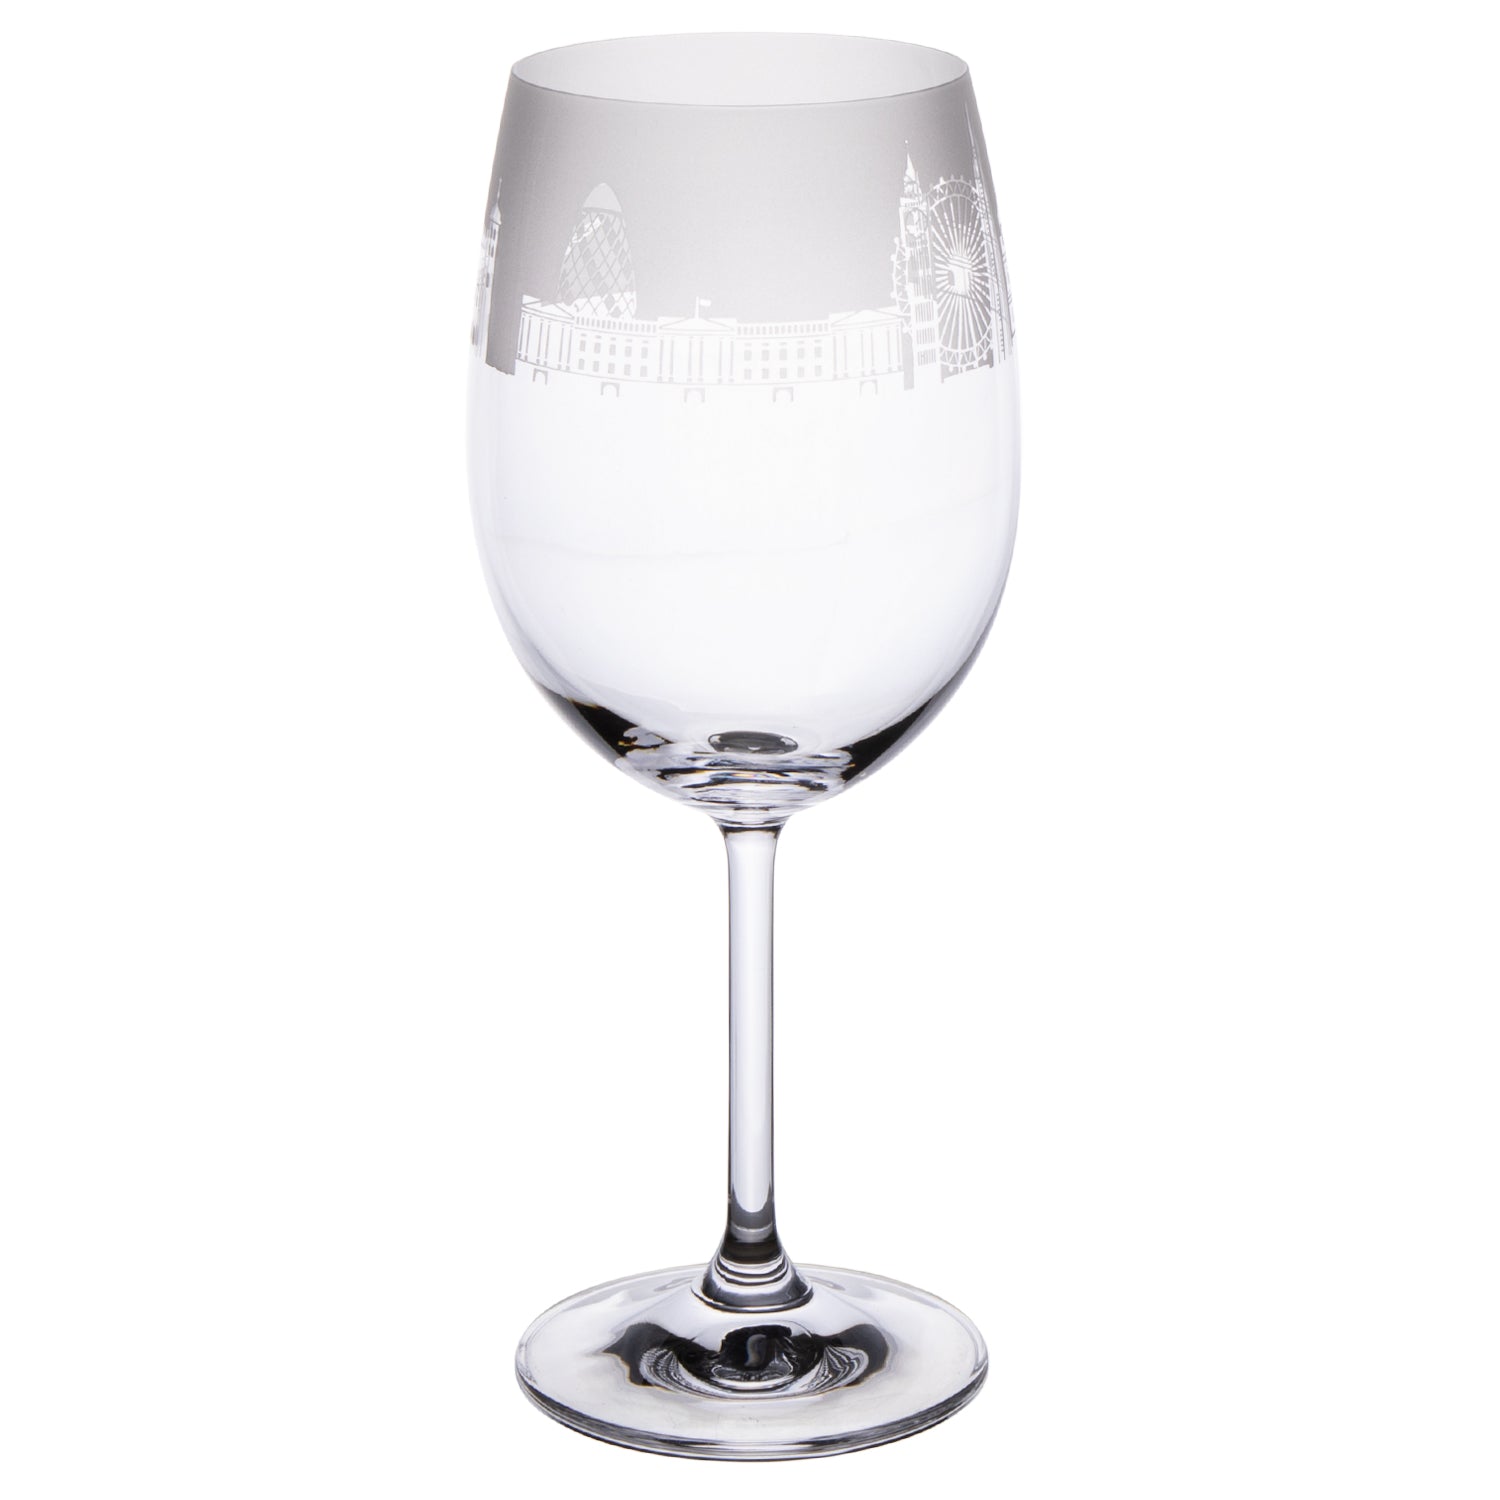 London Wine Glass - White 2